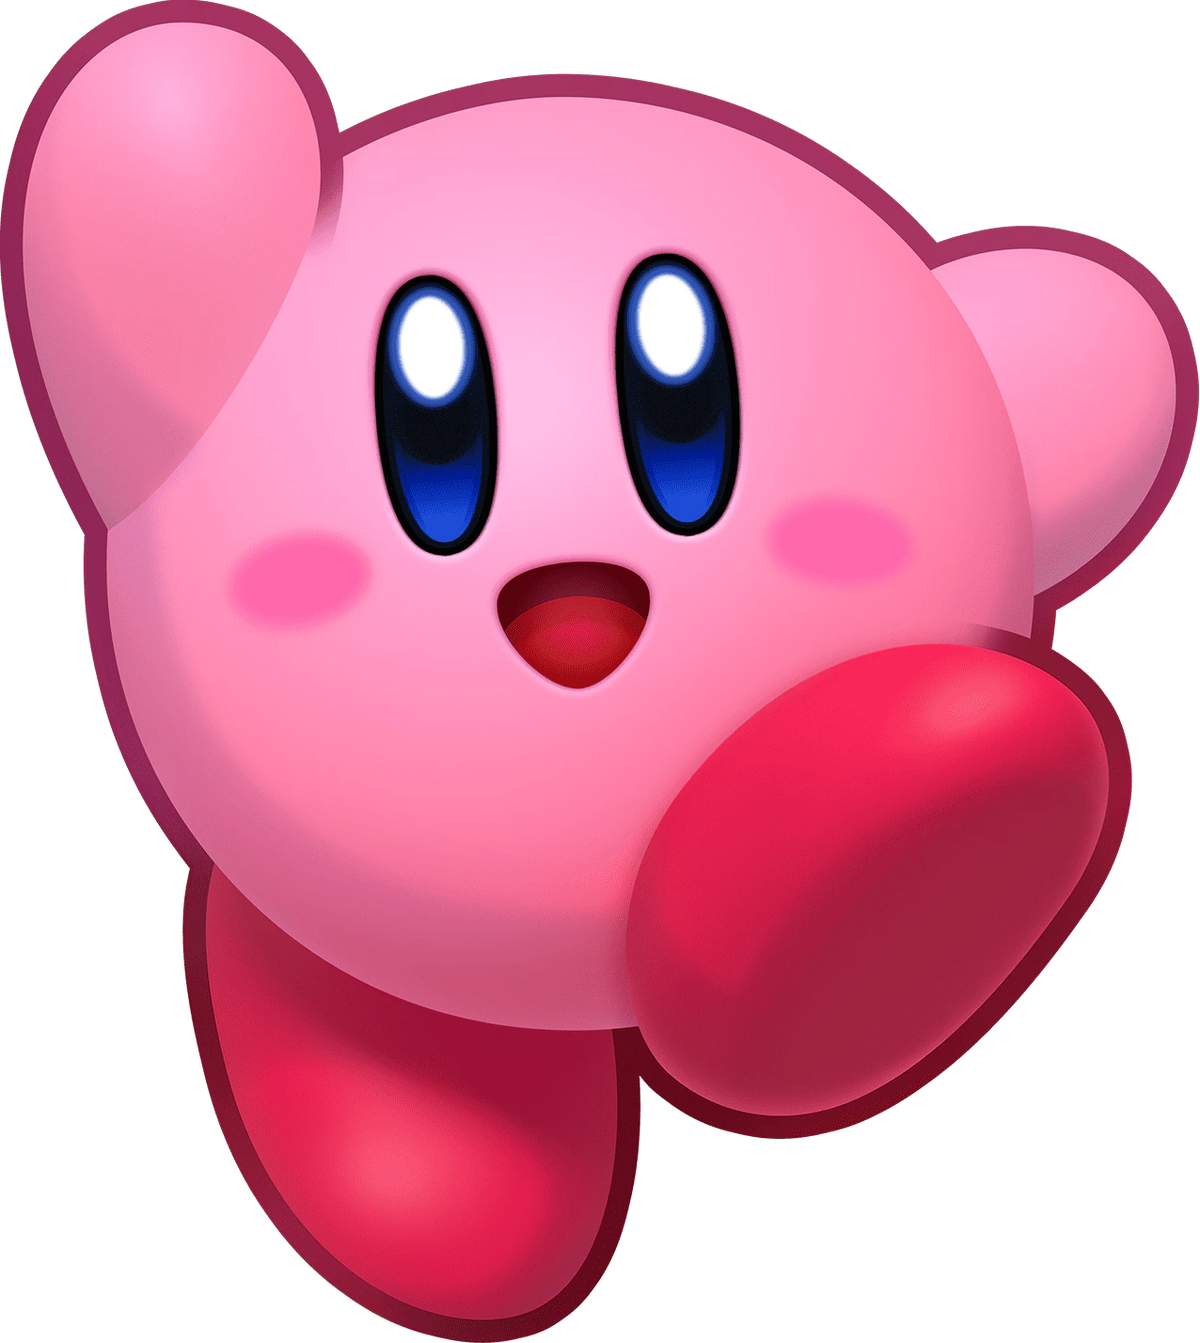 JUMBO Kirby Adventure Run Kirby Plush Toy Super Soft Cushion Pillow RARE  Doll